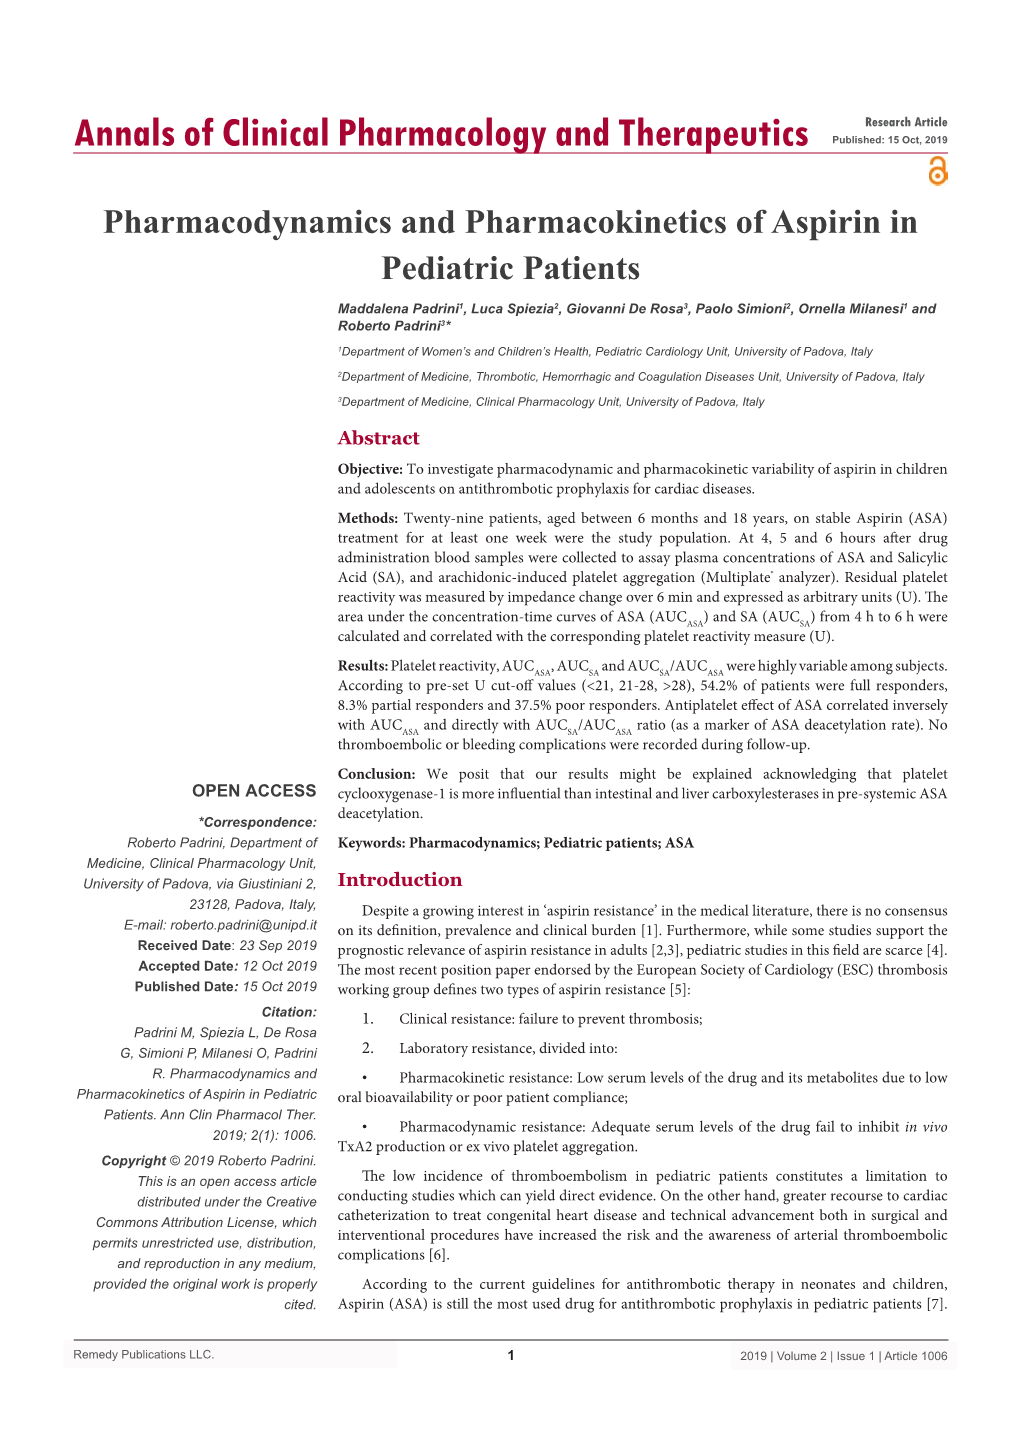 Pharmacodynamics and Pharmacokinetics of Aspirin in Pediatric Patients